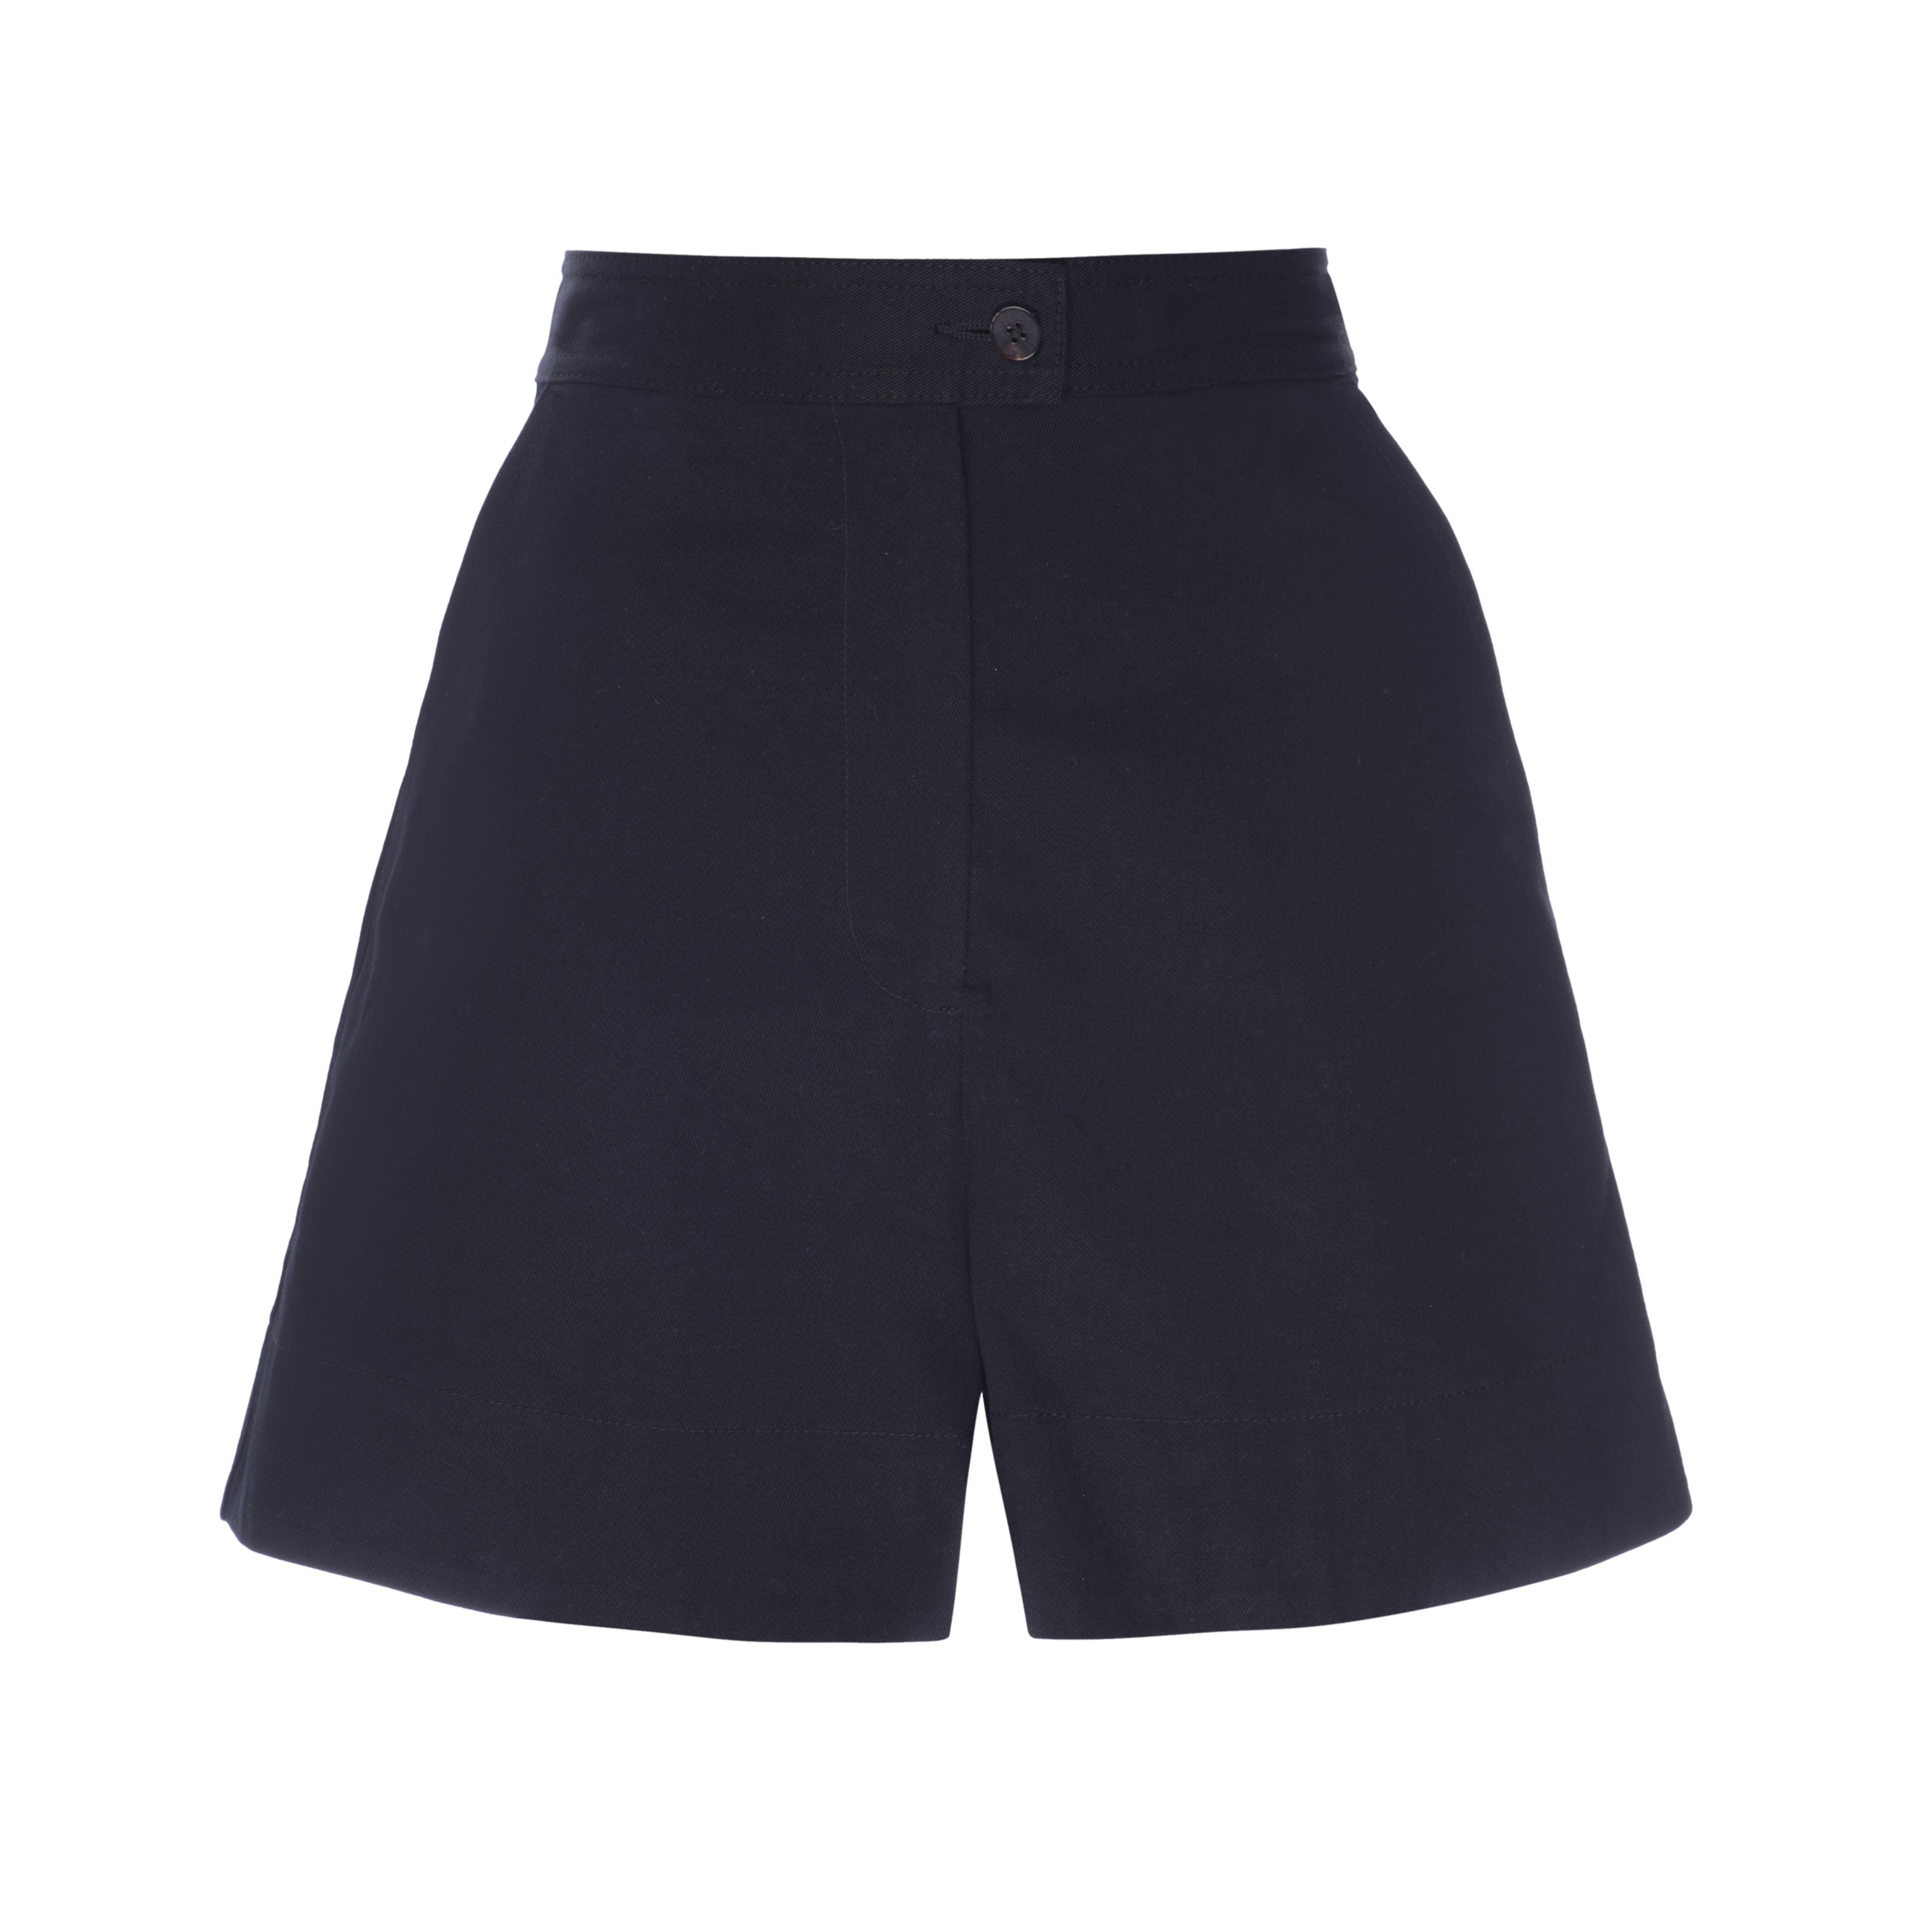 French Boat Shorts—Black Twill